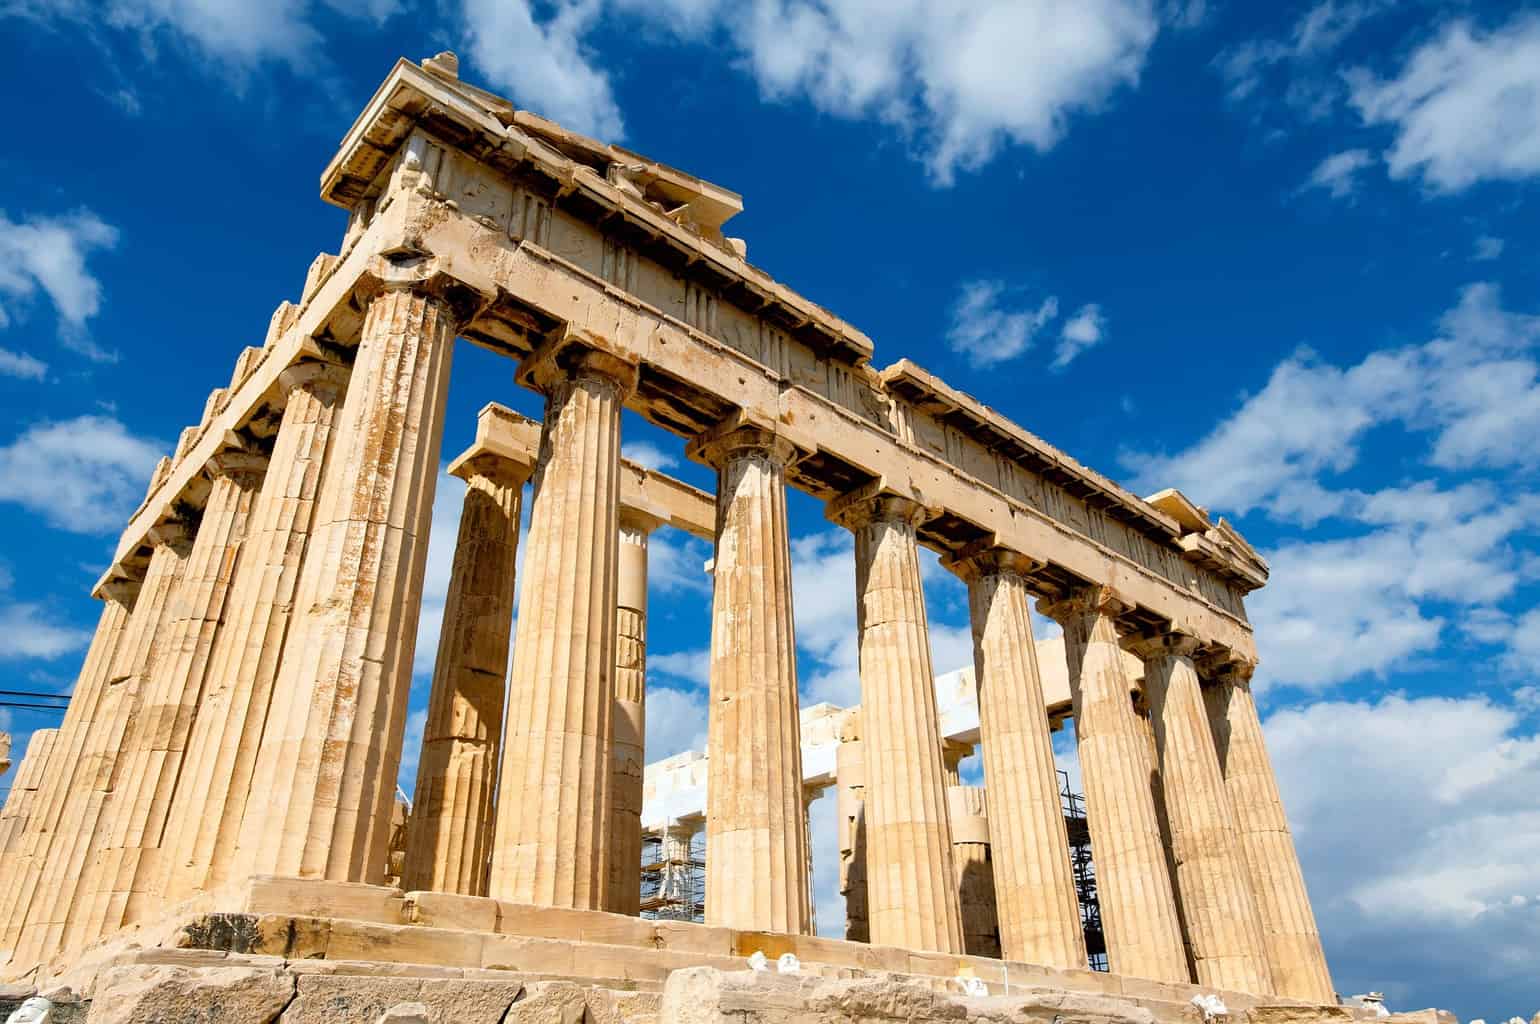 Voyage en groupe gay: Nude Sail Spetses, Epidaure et Athènes